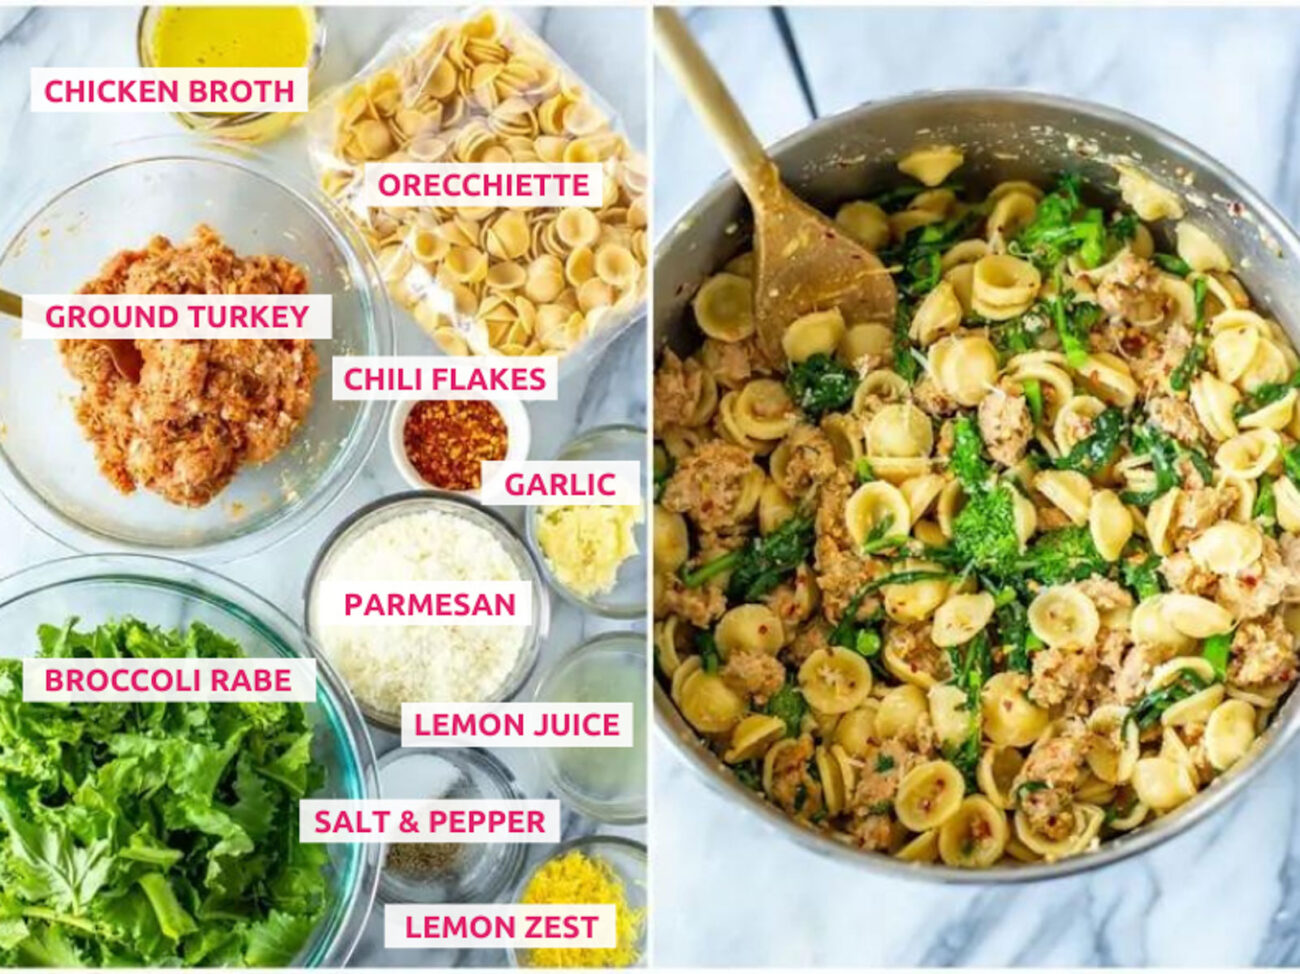 Ingredients for orecchiette with sausage and broccoli rabe: orecchiette, ground turkey, chicken broth, chili flakes, parmesan, garlic, broccoli rabe, salt, pepper, lemon zest and lemon juice.